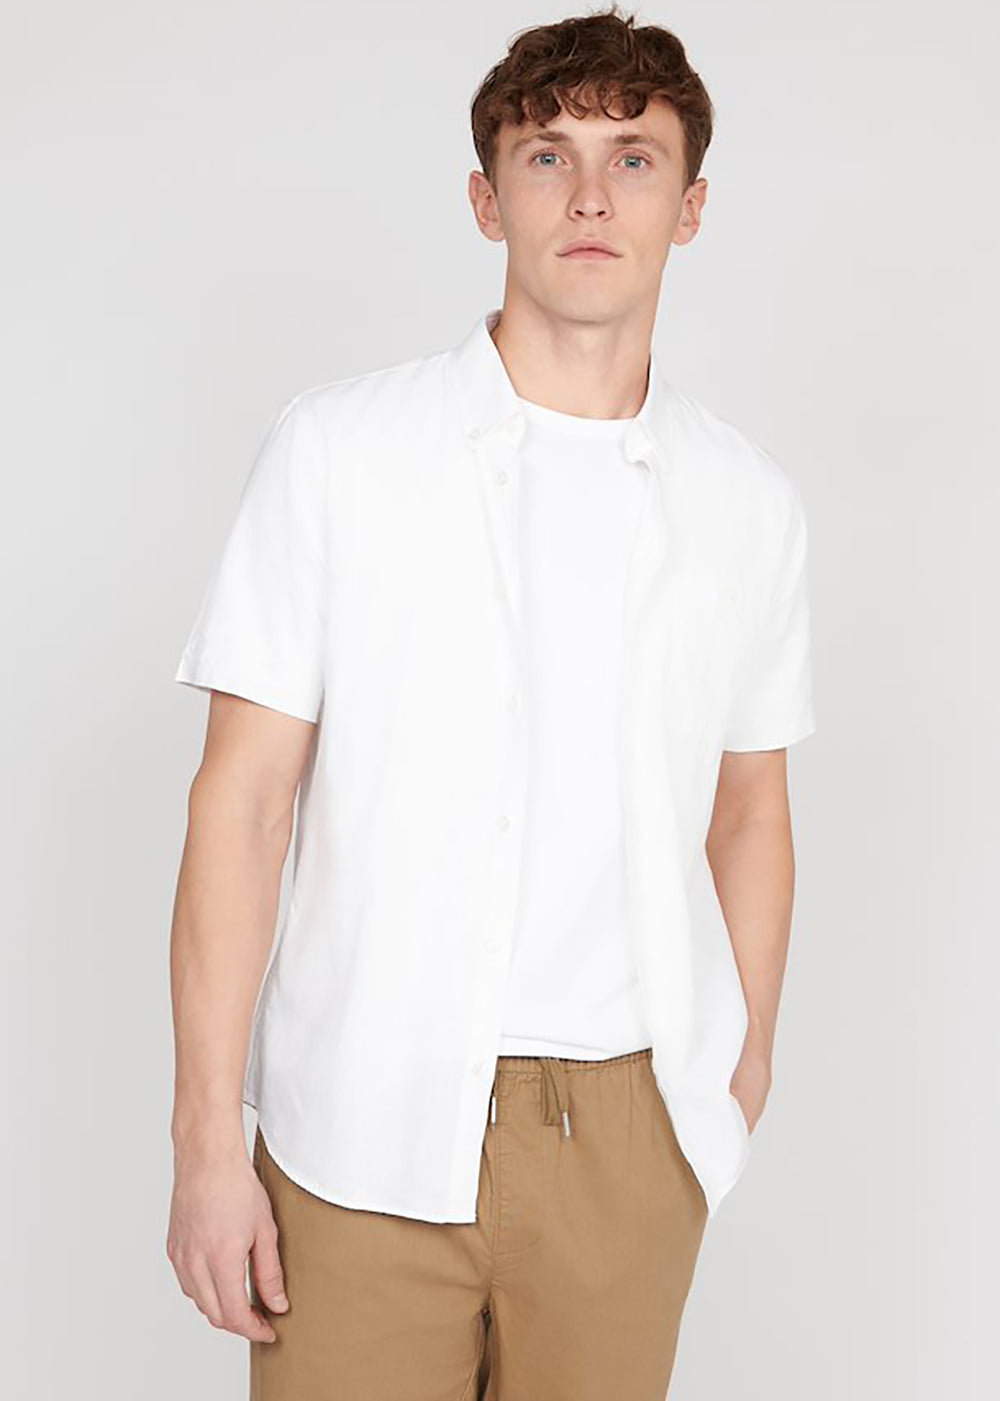 Trostol Button Down Short Sleeve Shirt - White - Matinique Canada - Danali